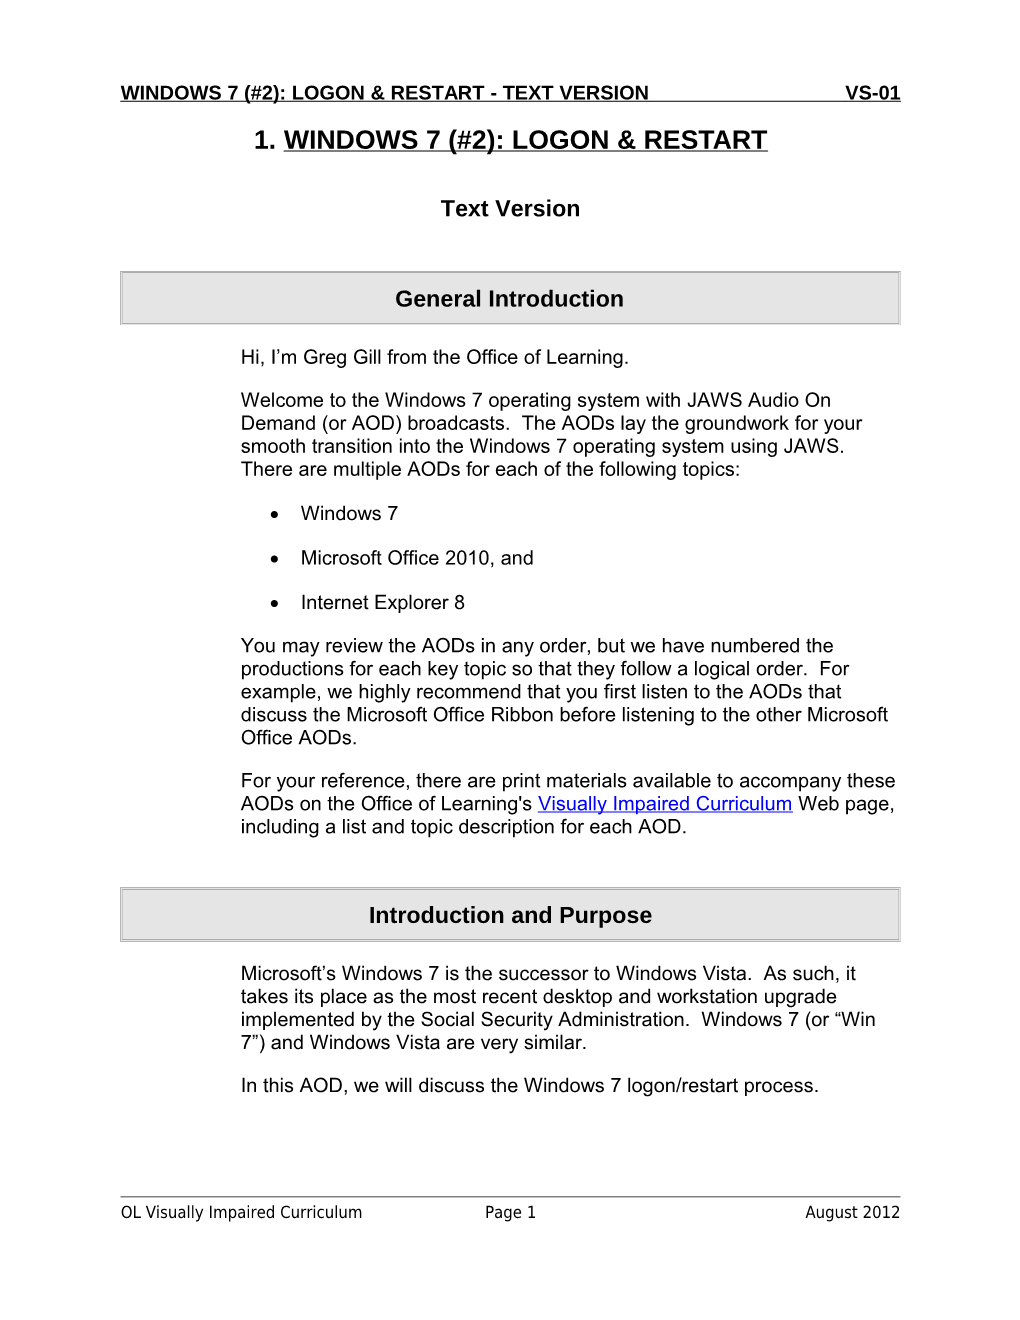 Windows 7 (#2): Logon & Restart - Text Version